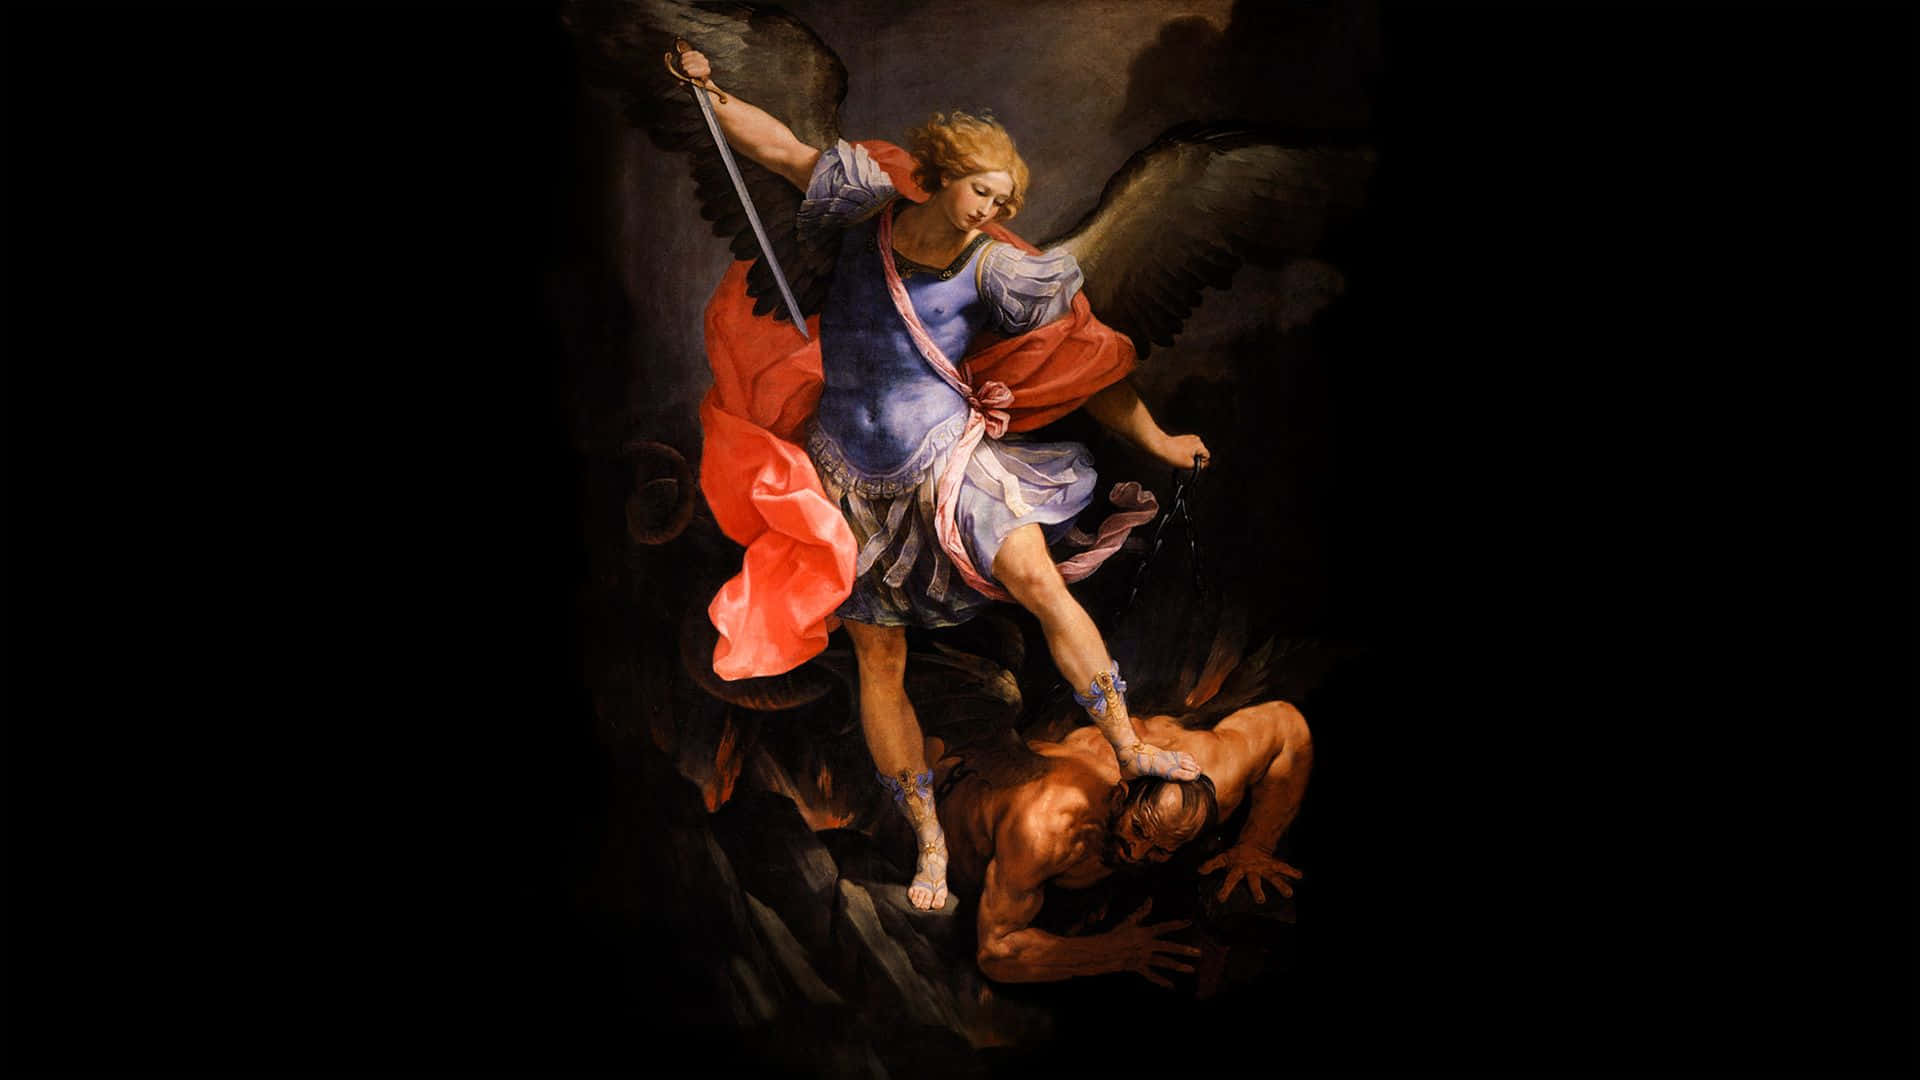 The Angel of Mercy: Saint Michael